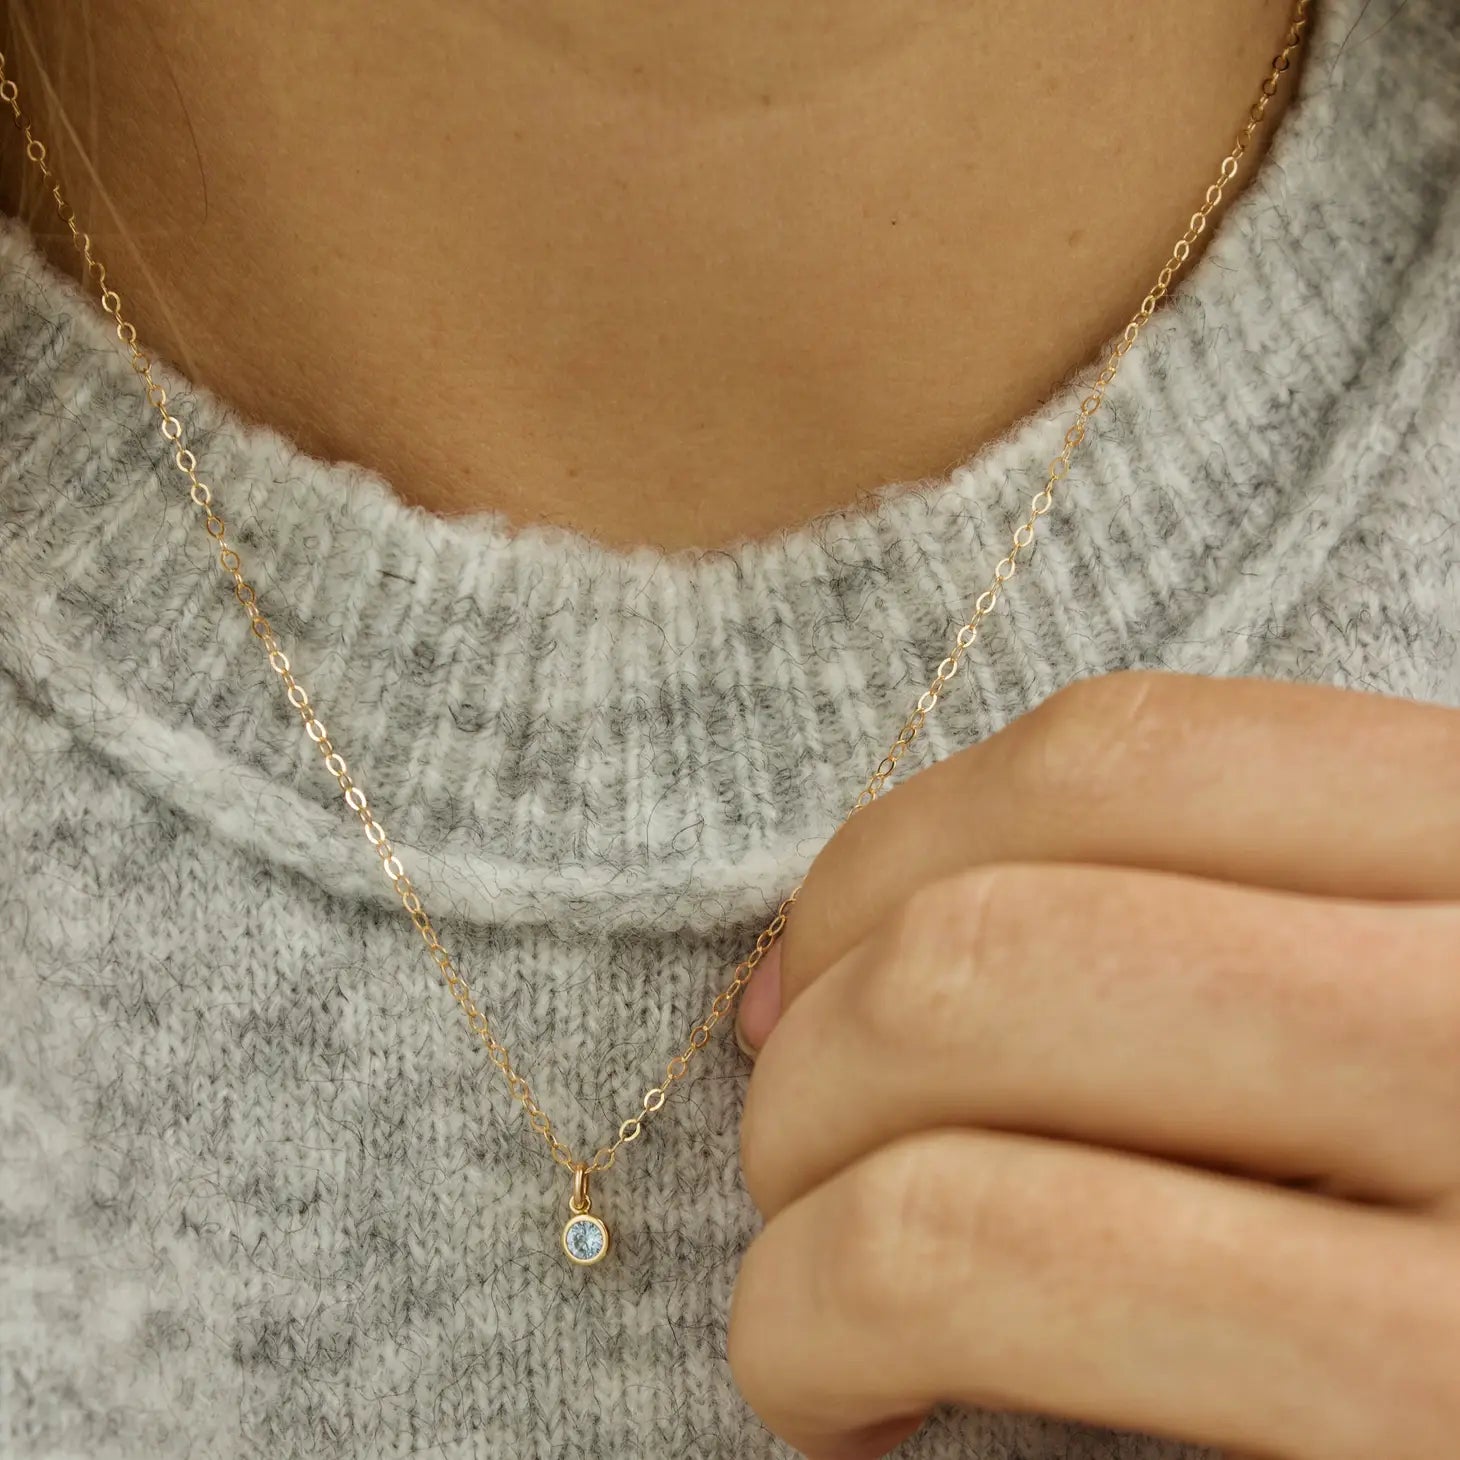 Miniature Birthstone Necklace